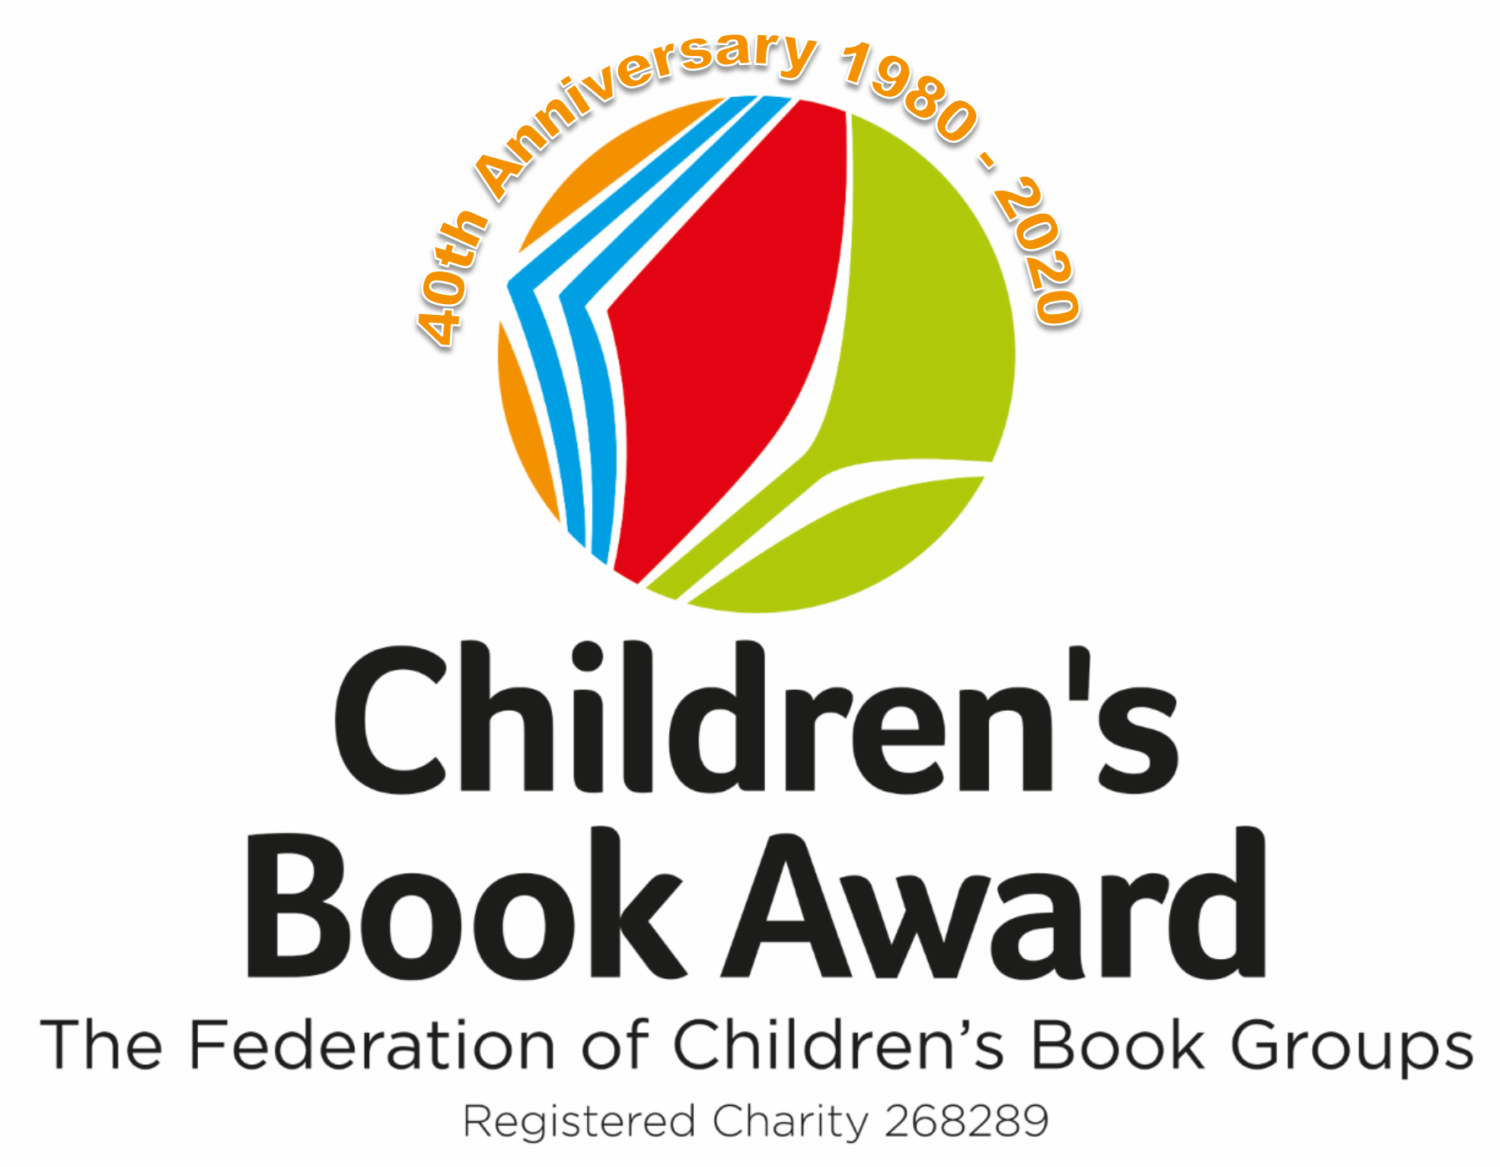 The 2020 FCBG Children’s Book Award The Federation of Children's Book